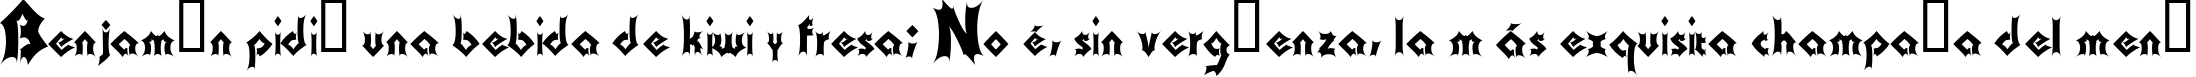 Пример написания шрифтом Transylvania текста на испанском